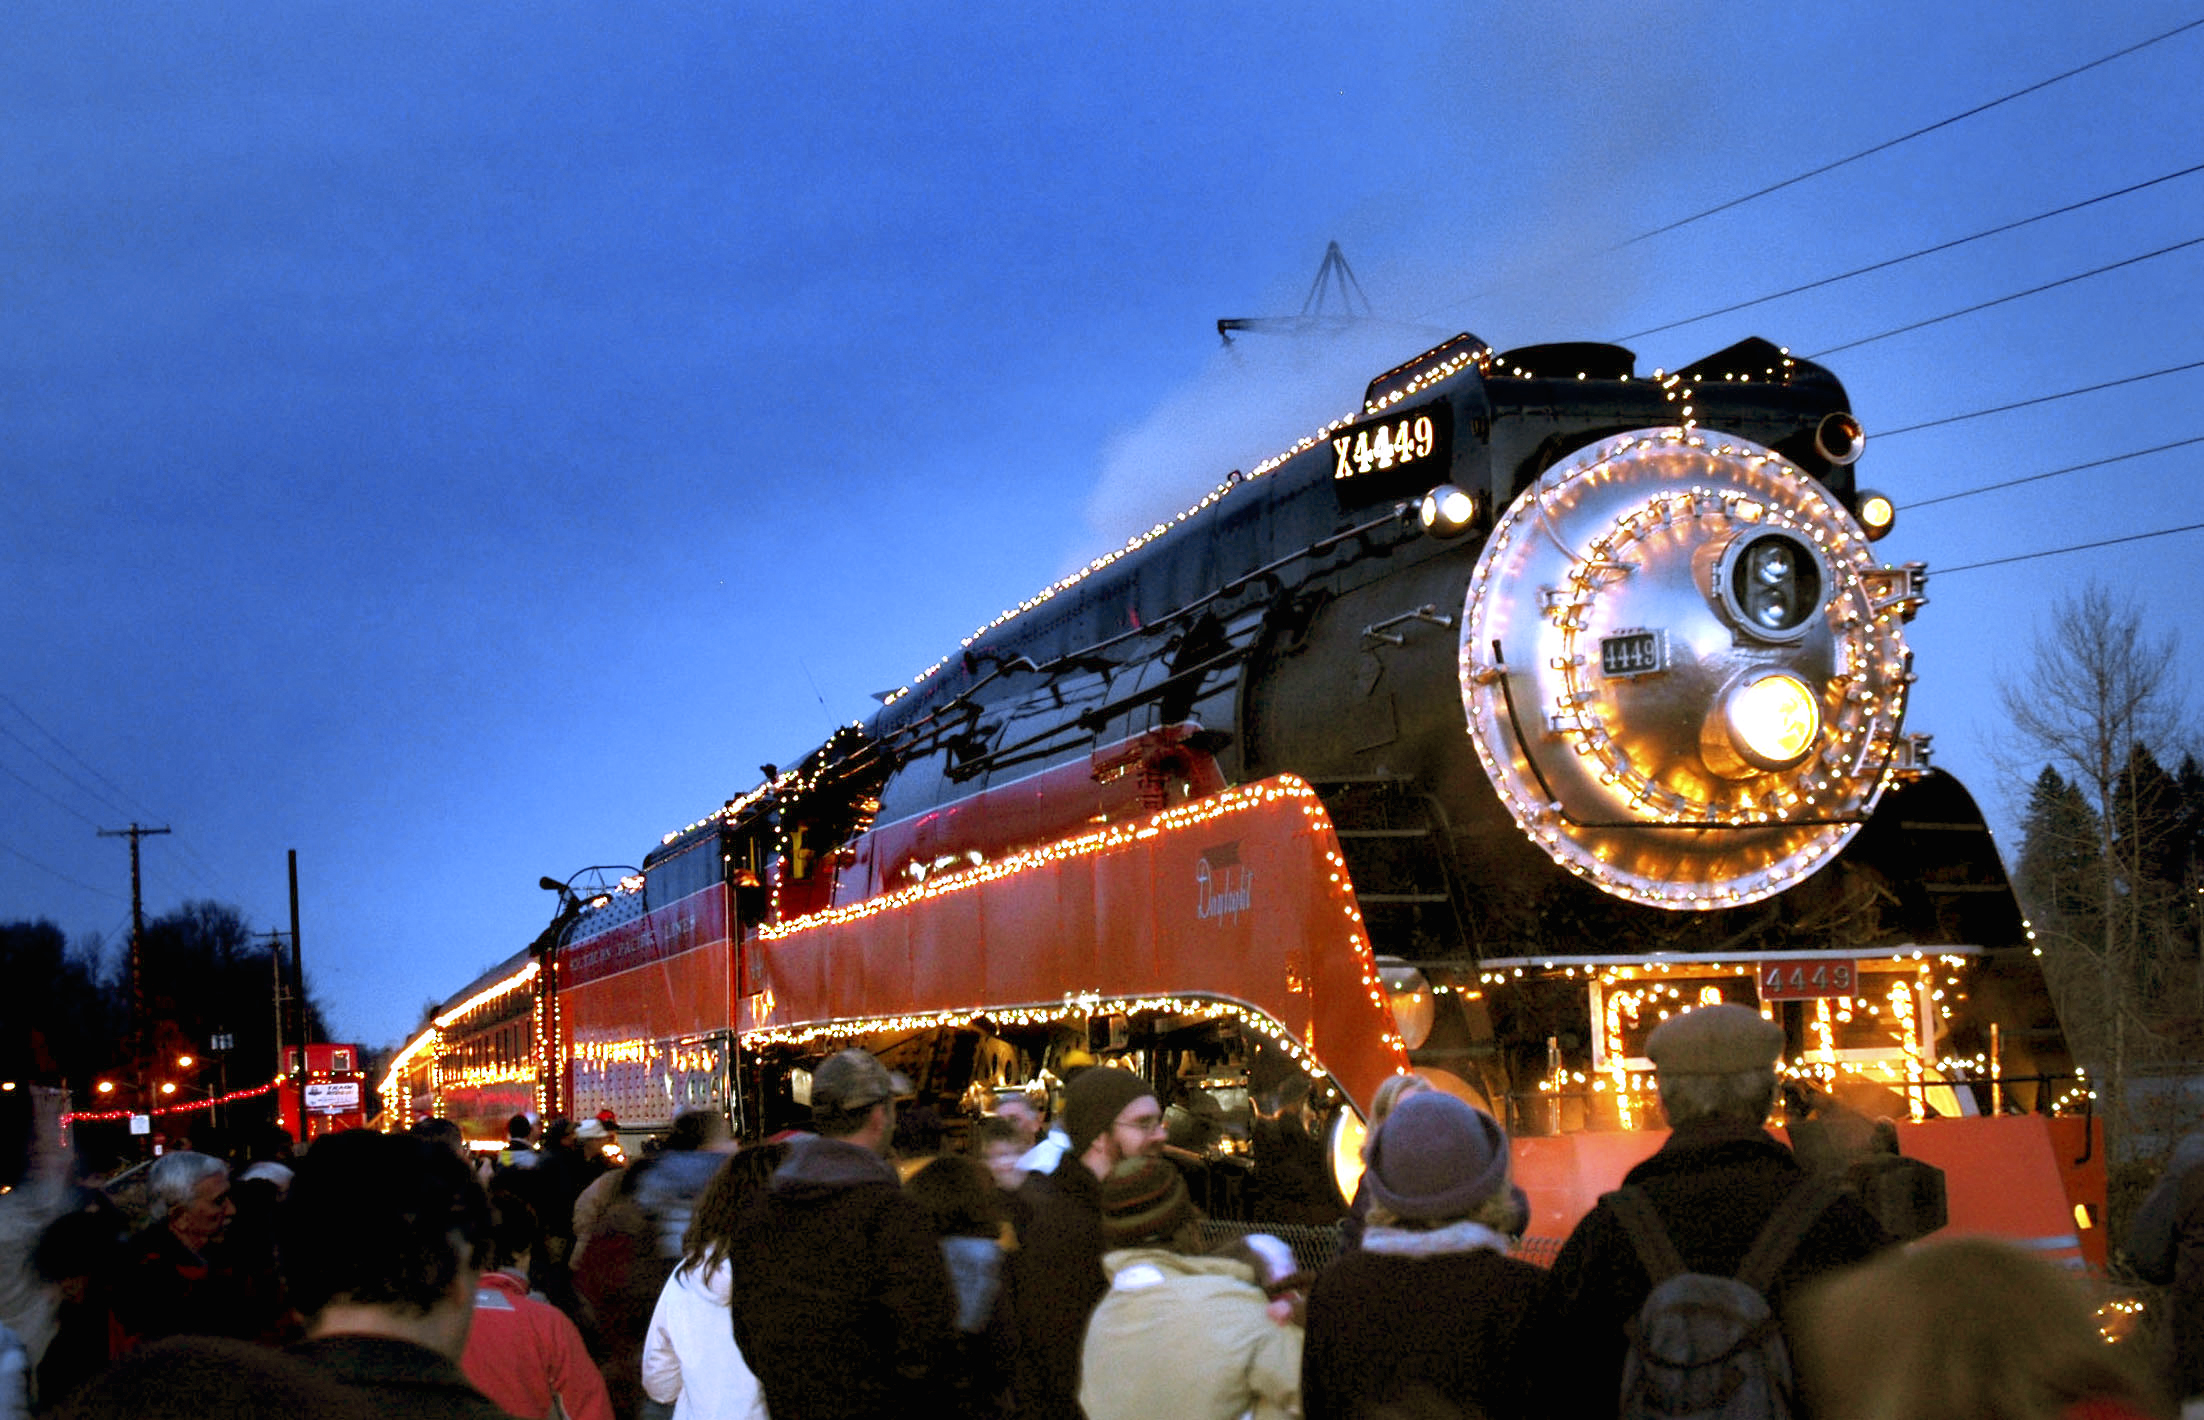 Holiday train rides return to Oregon railroads for 2021 season - oregonlive.com